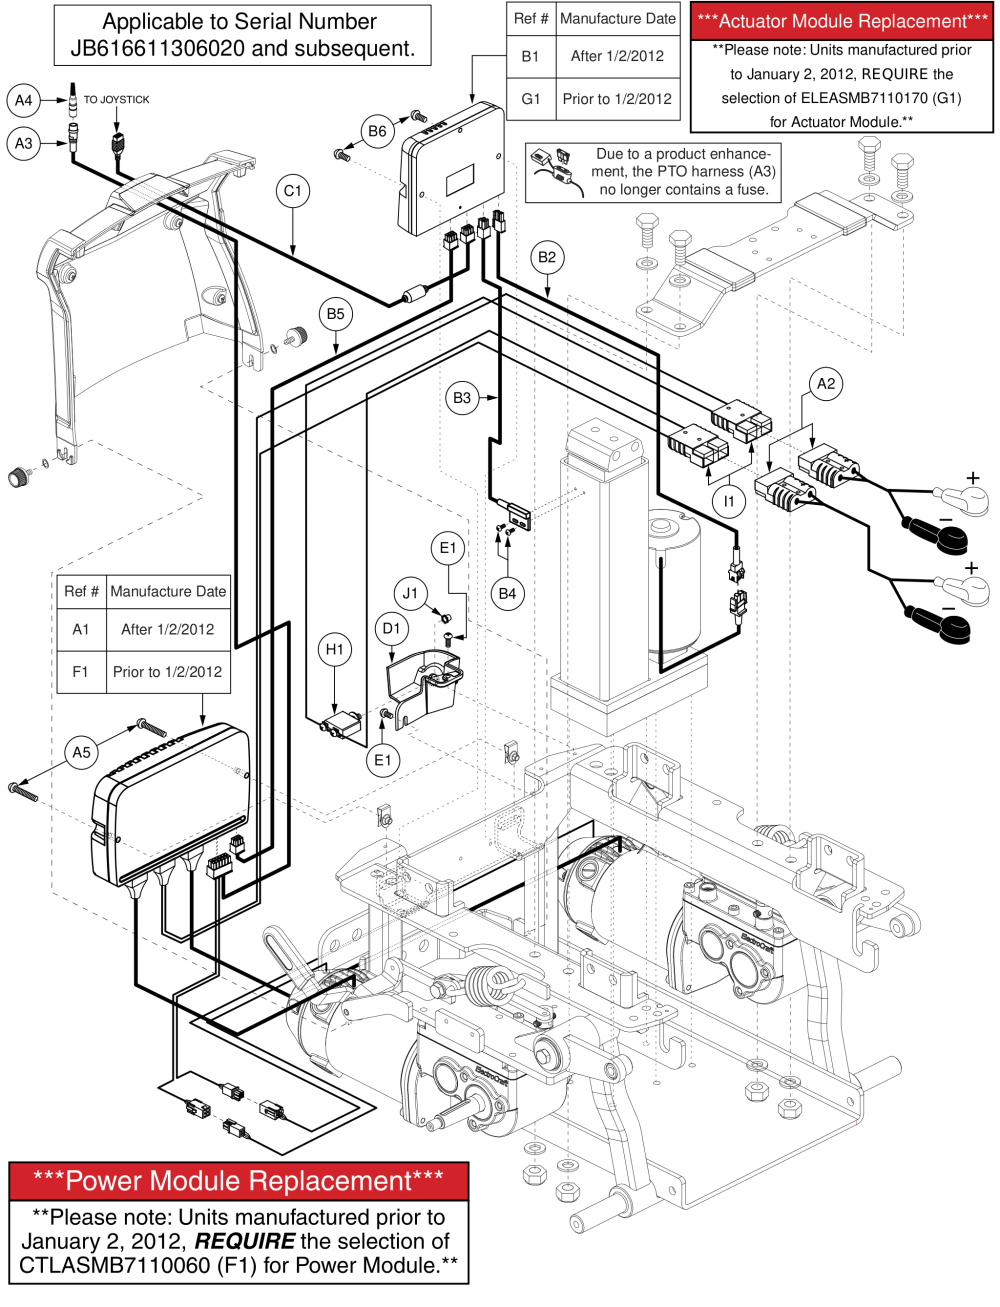 Q-logic Electronics Assy, Accu-trac, Power Seat Thru Joystick, Q6 Edge parts diagram